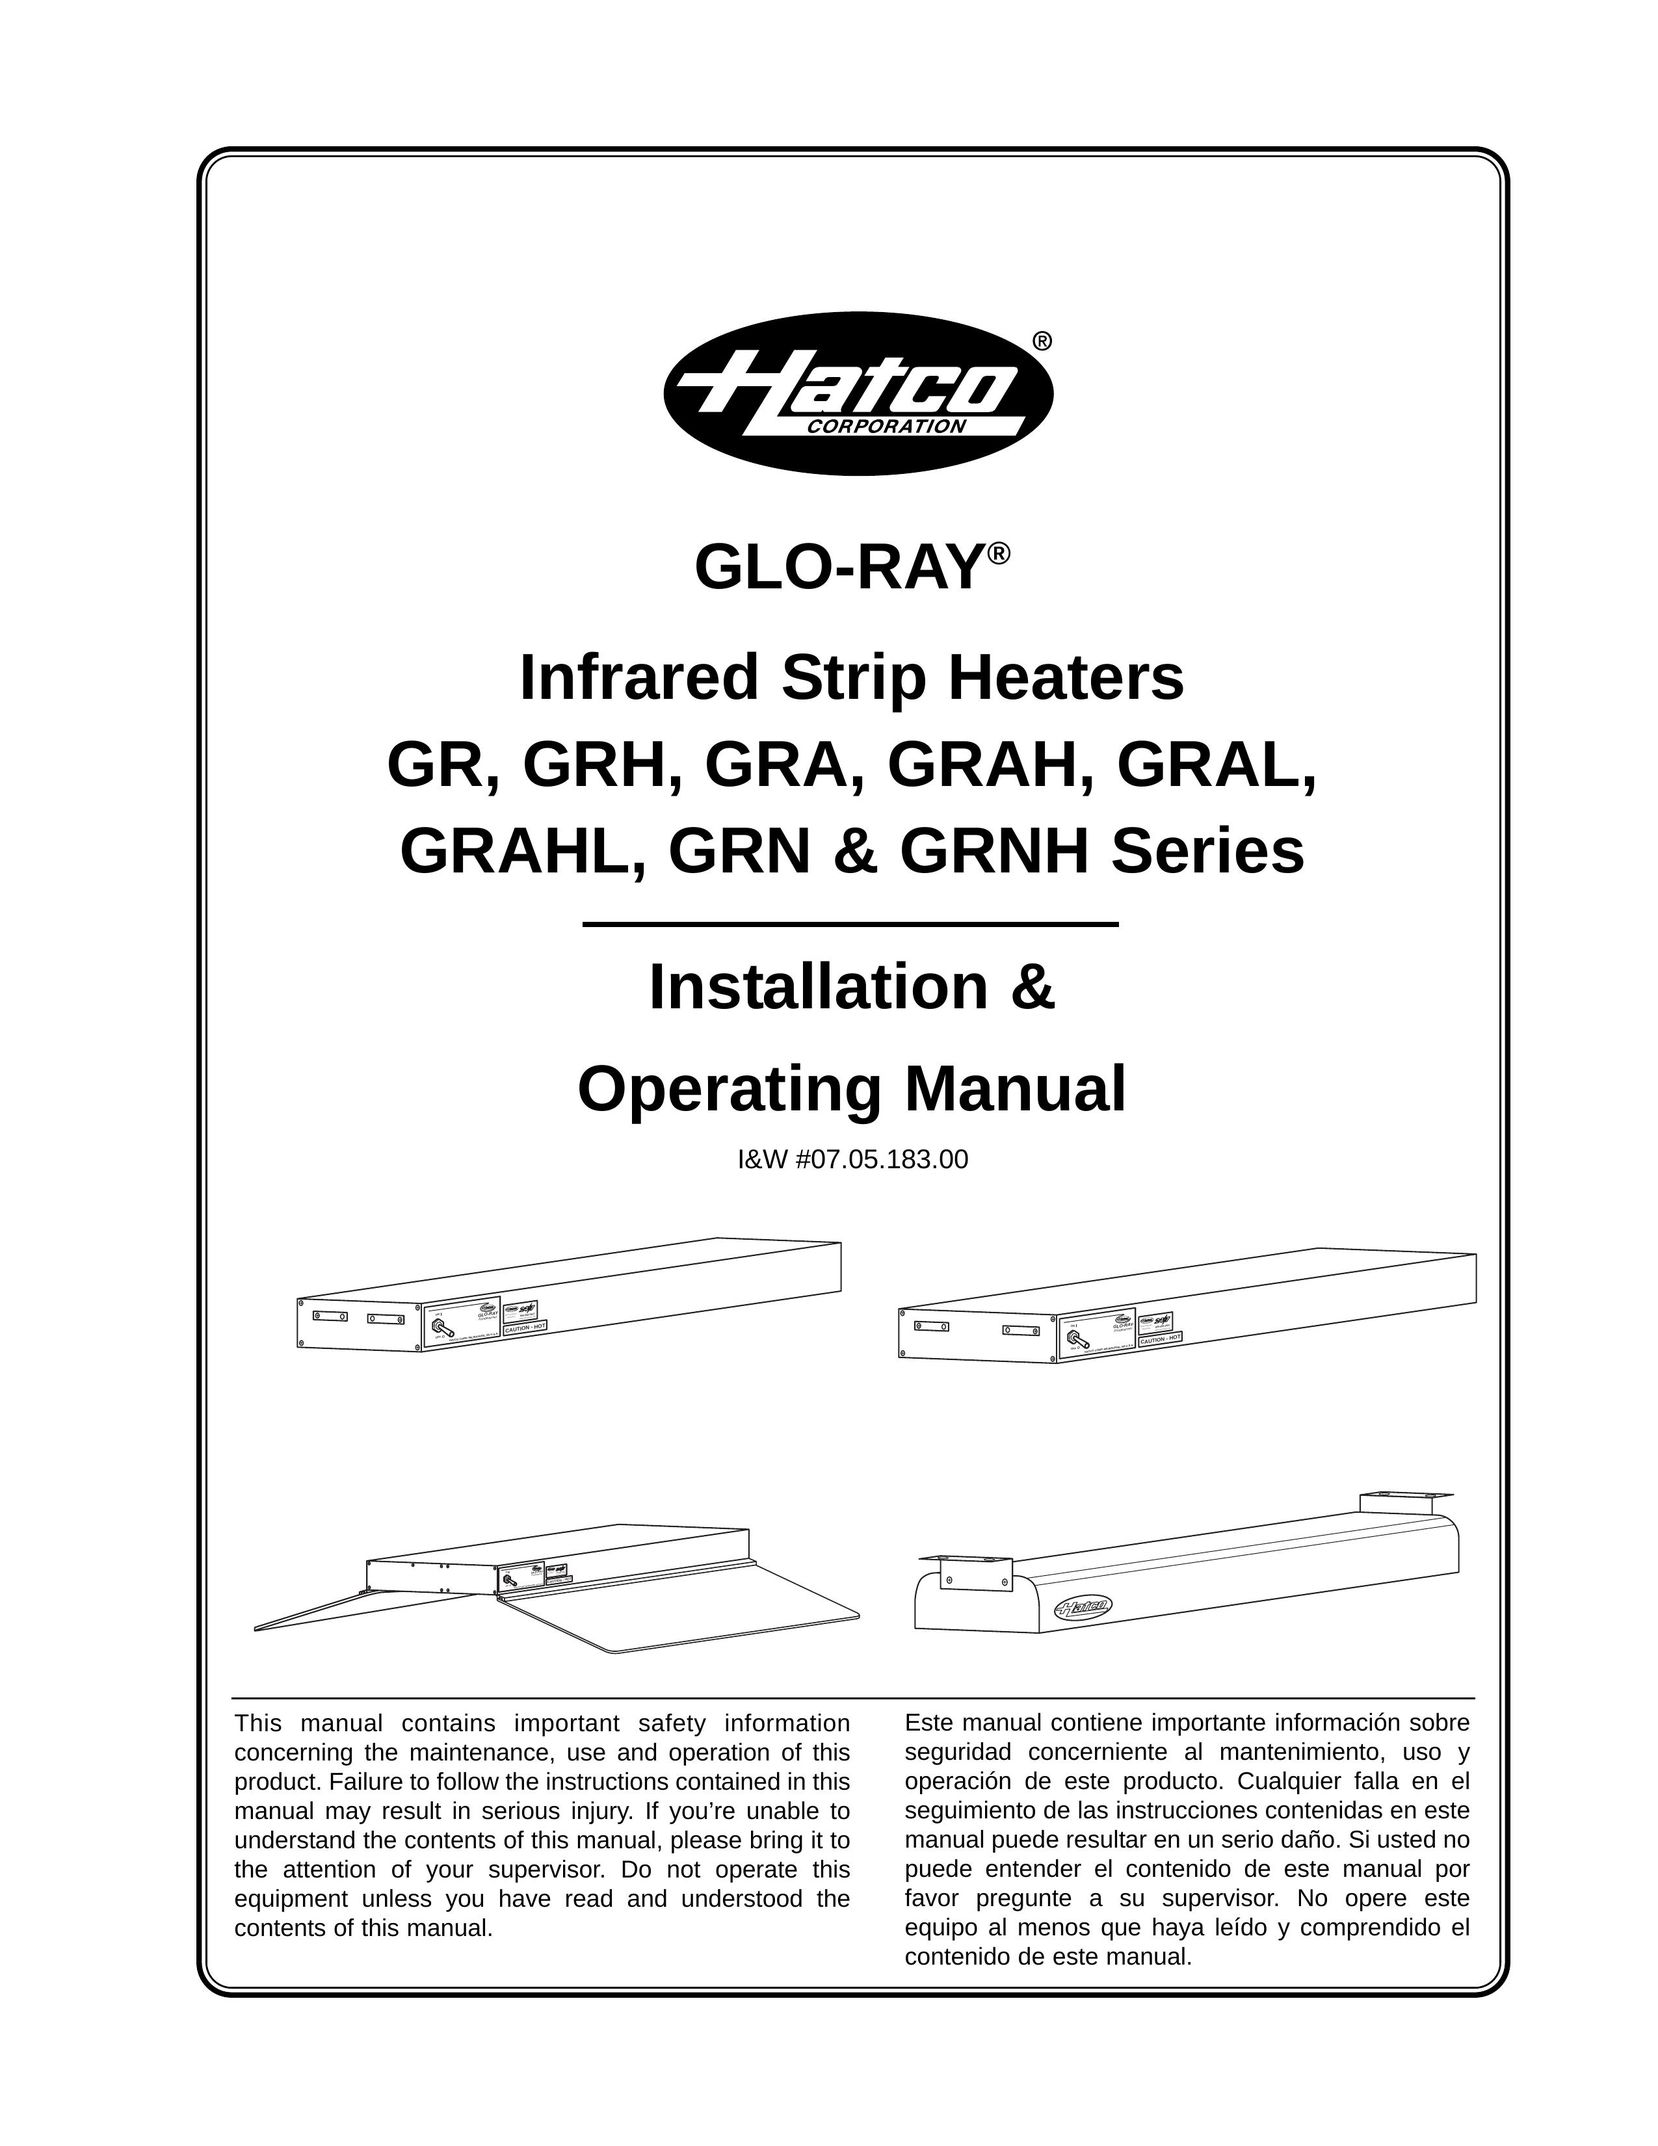 Hatco GRAHL Printer Accessories User Manual